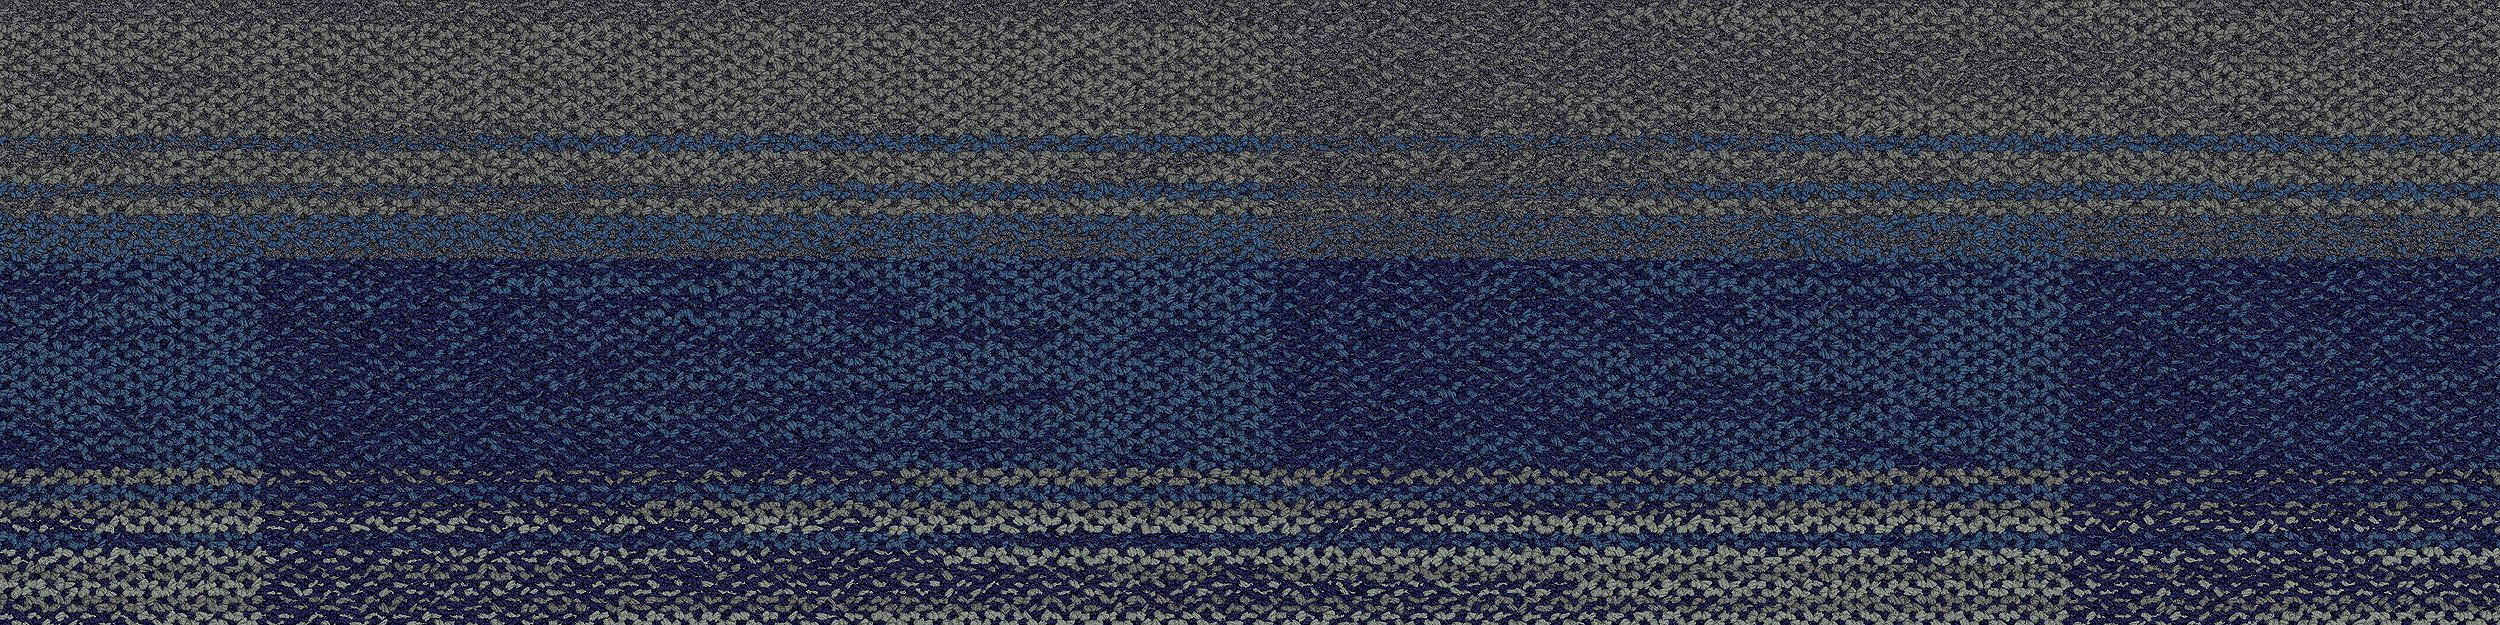 AE315 Carpet Tile In Granite/Azure image number 9